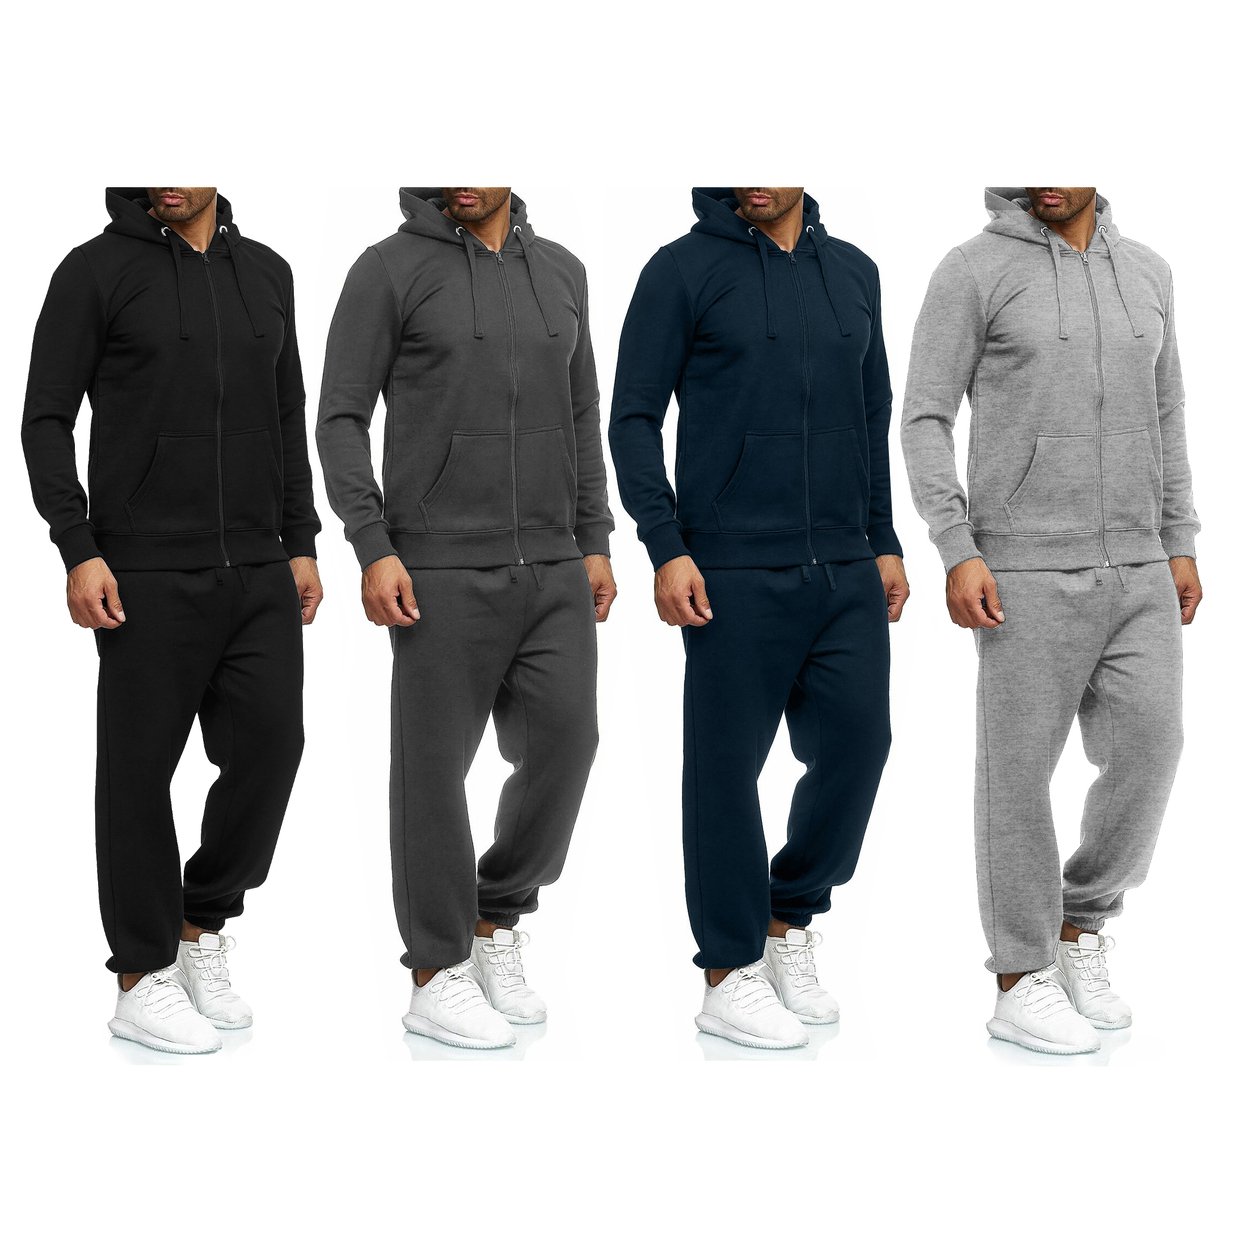 4-Piece: Men's Winter Warm Cozy Athletic Multi-Pockets BIG & TALL Sweatsuit Set - Navy, Medium